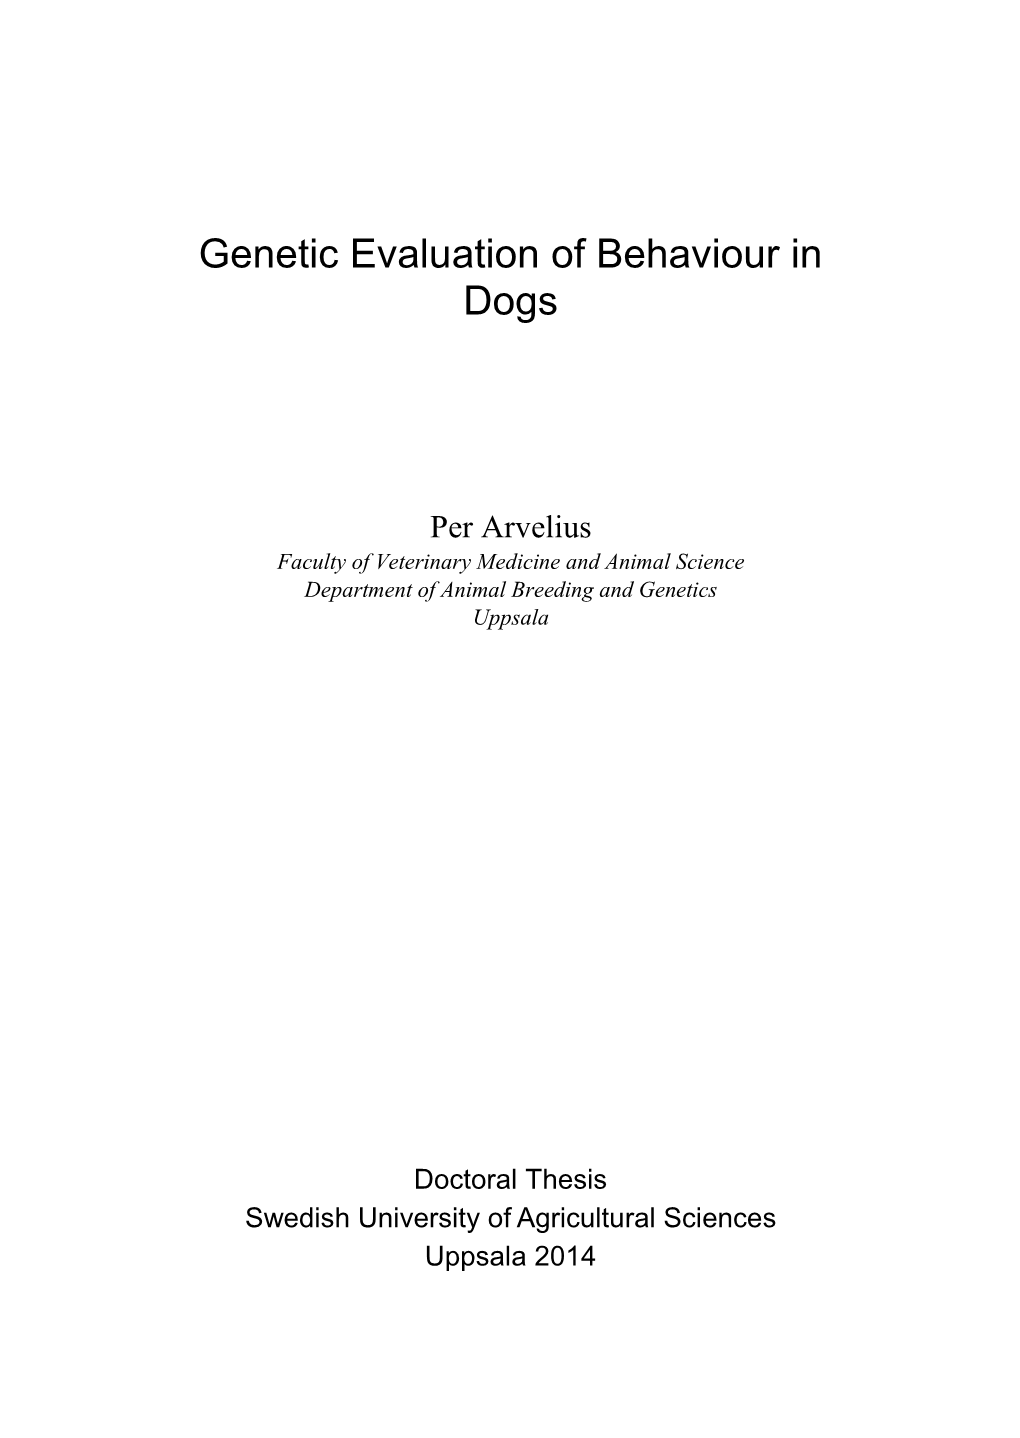 Genetic Evaluation of Behaviour in Dogs